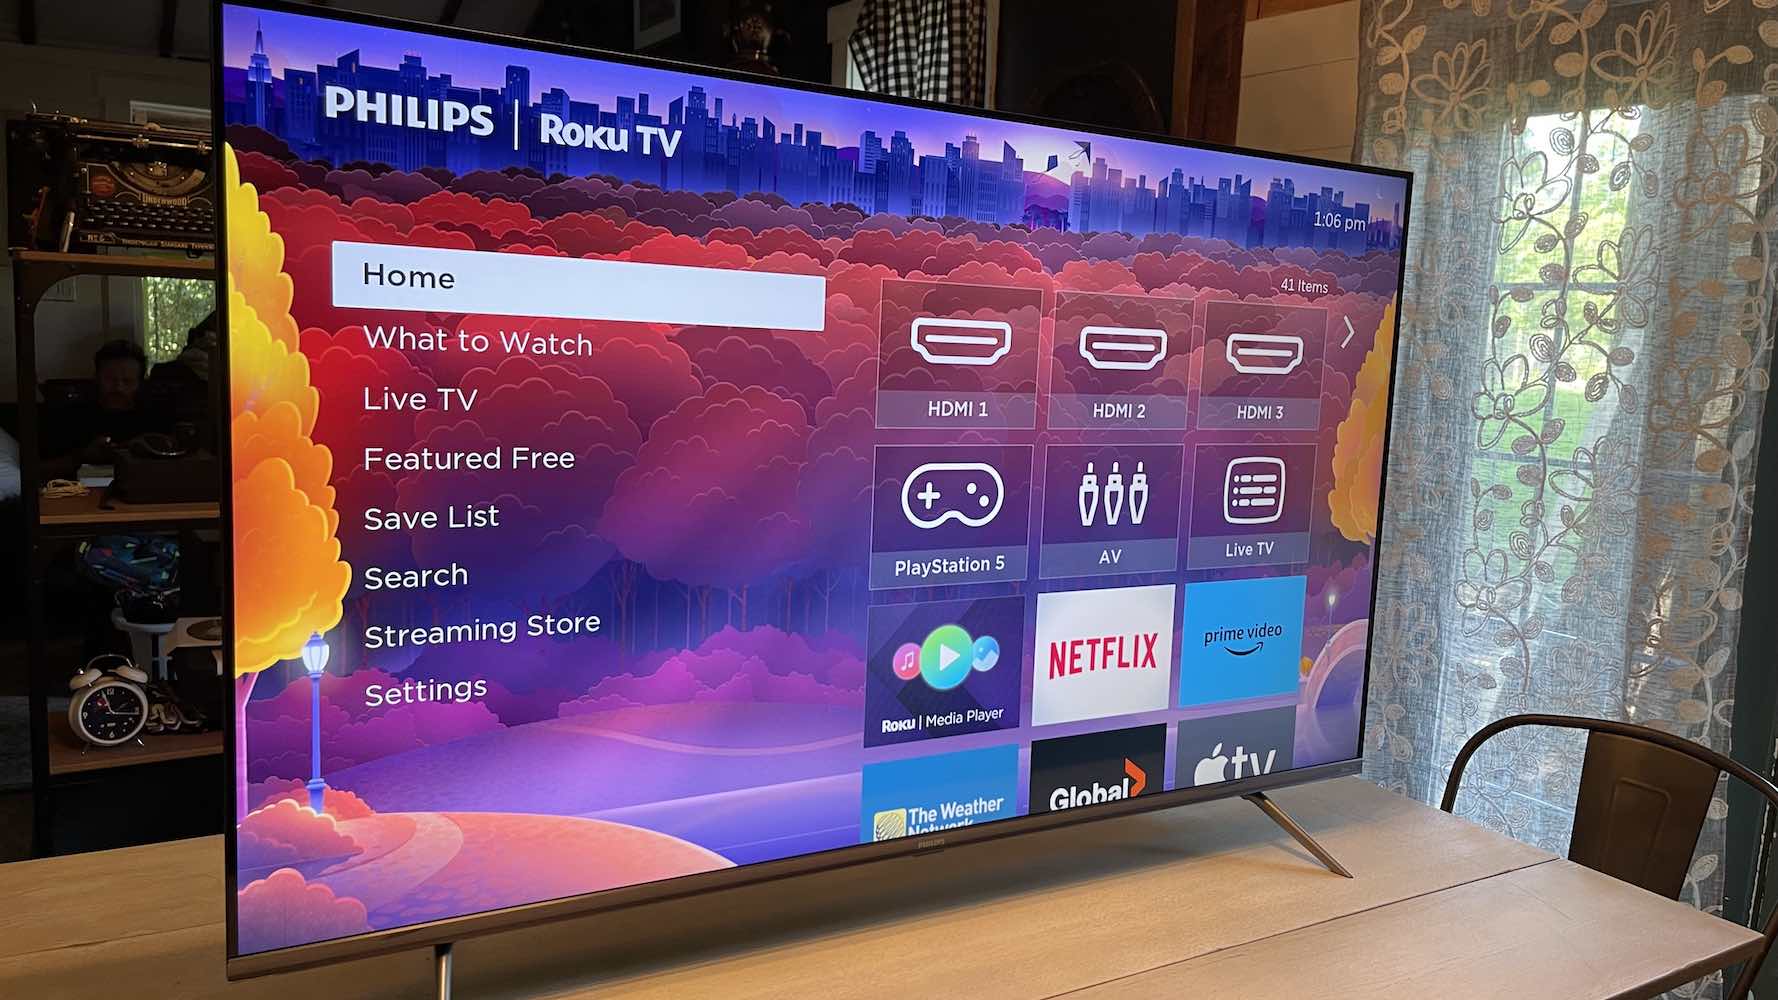 Philips 50 Class 4k Ultra HD (2160p) Roku Smart LED TV (50PUL6533/F7)  (New) 